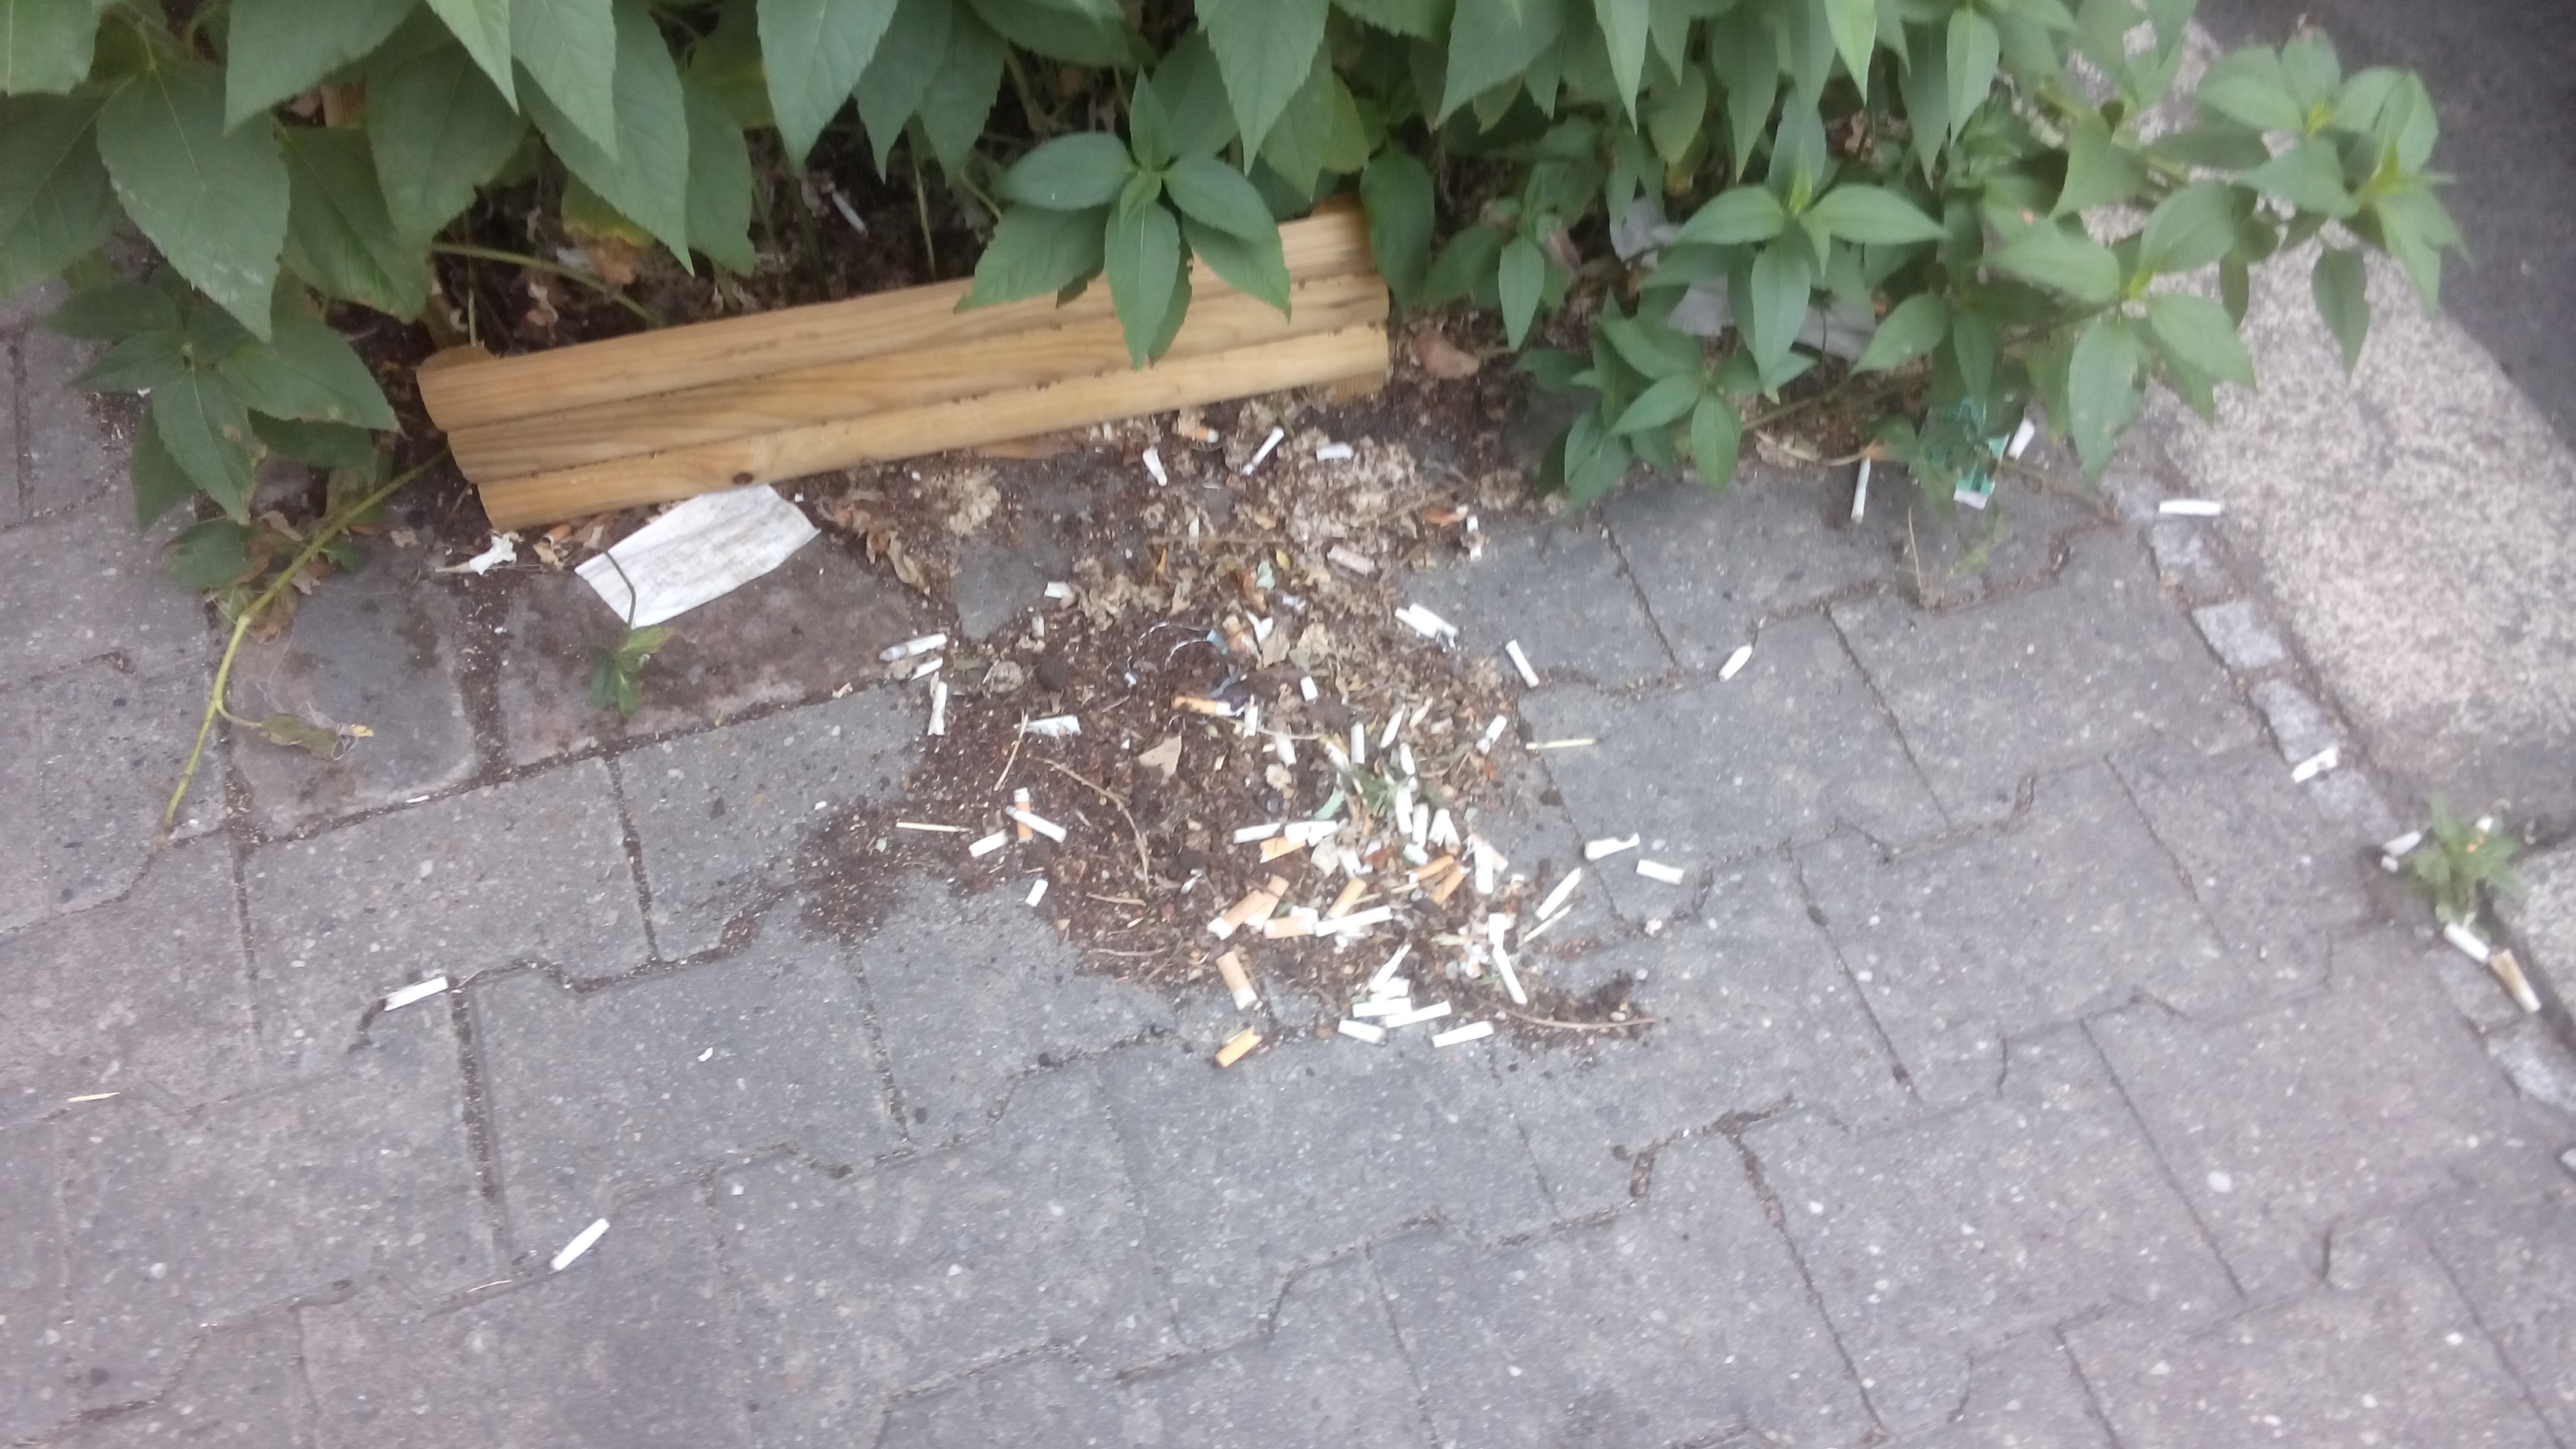 Berlin sidewalk, street tree bed and cigarette butts